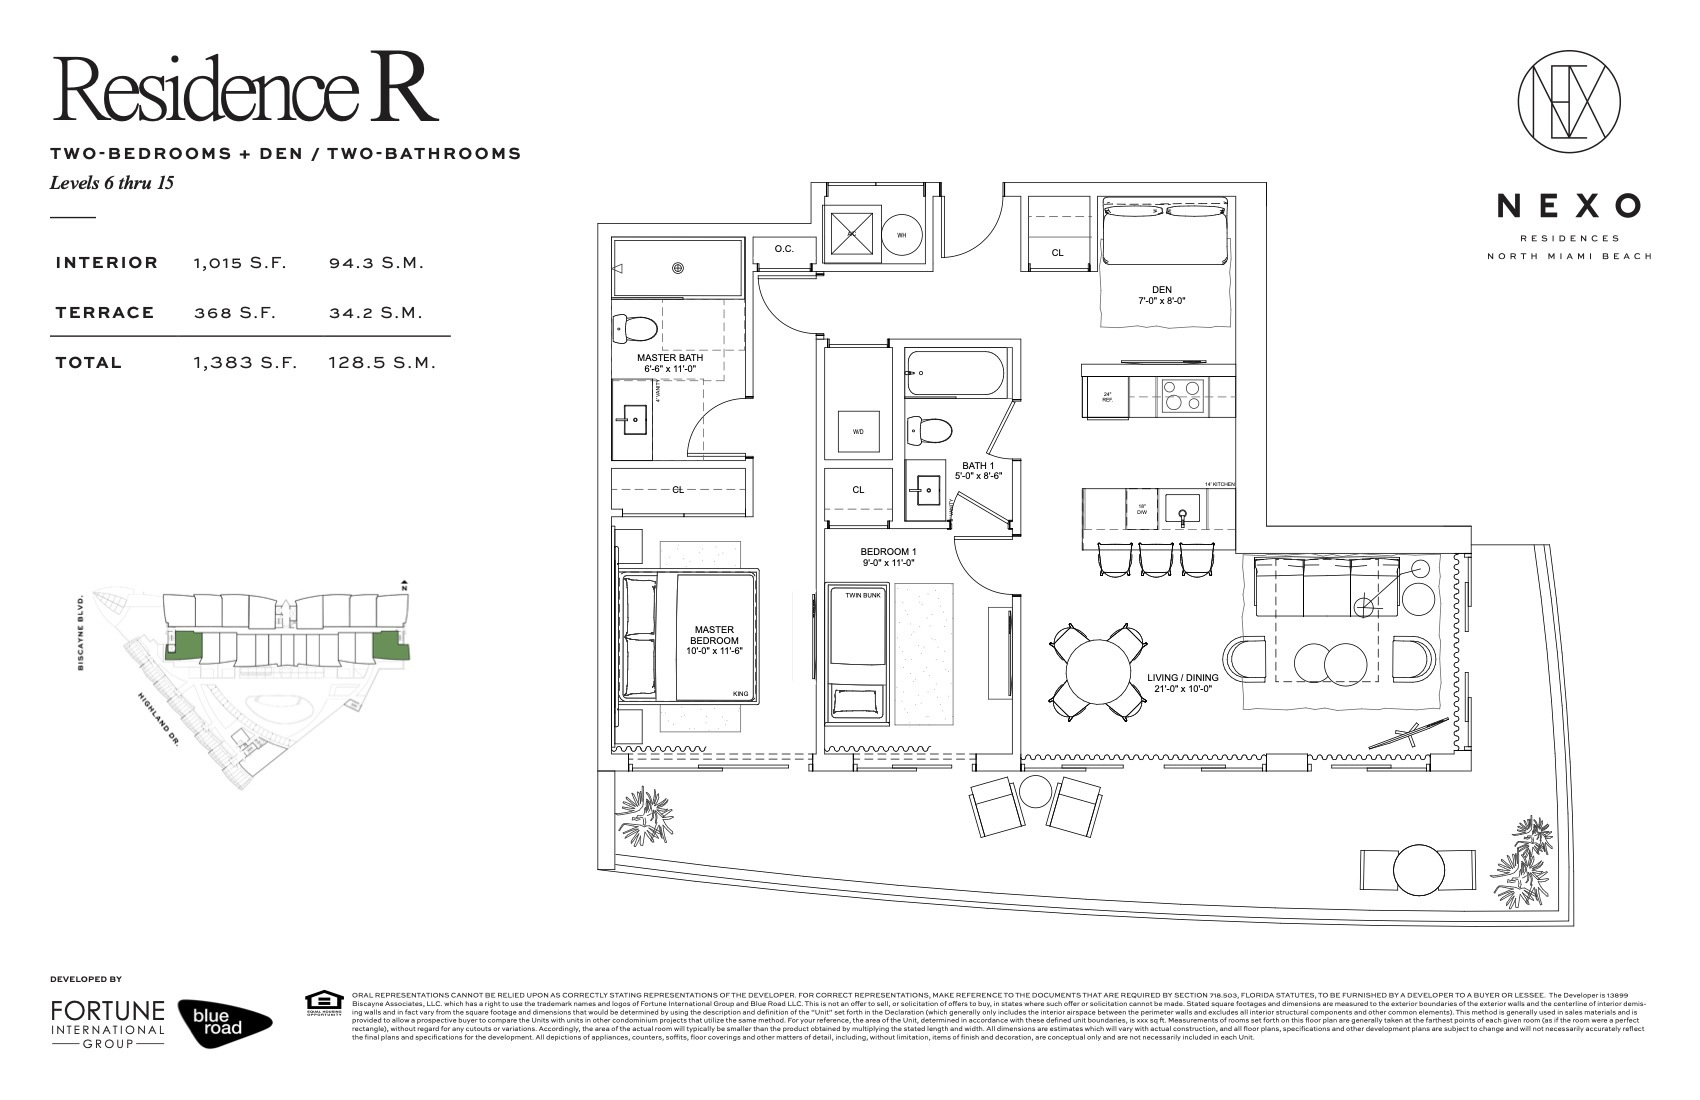 Floor Plan for Nexo Miami Beach Floorplans, Residence R